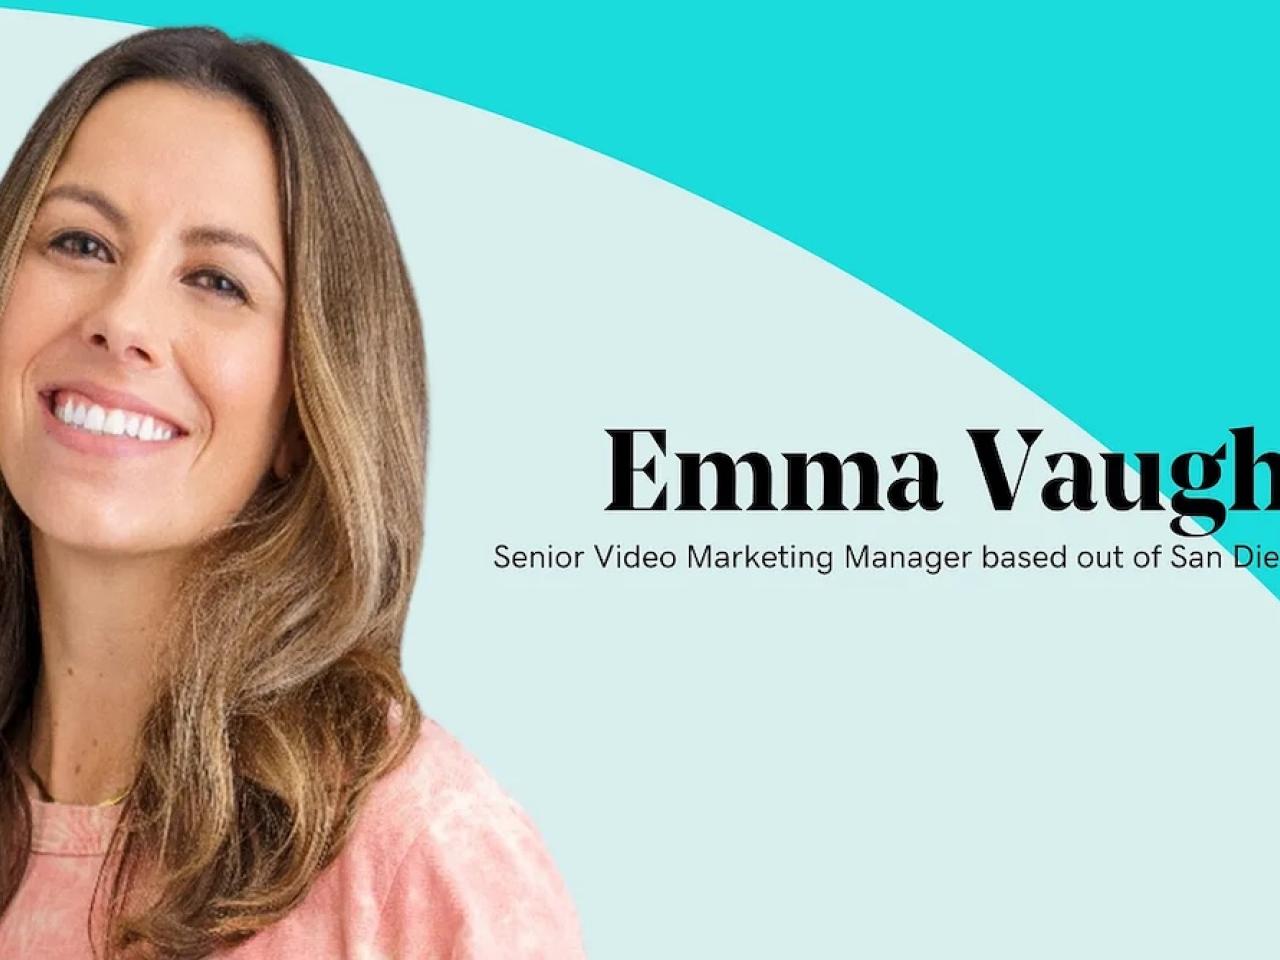 Emma Vaughn, Senior Video Marketing Manager, GoDaddy.